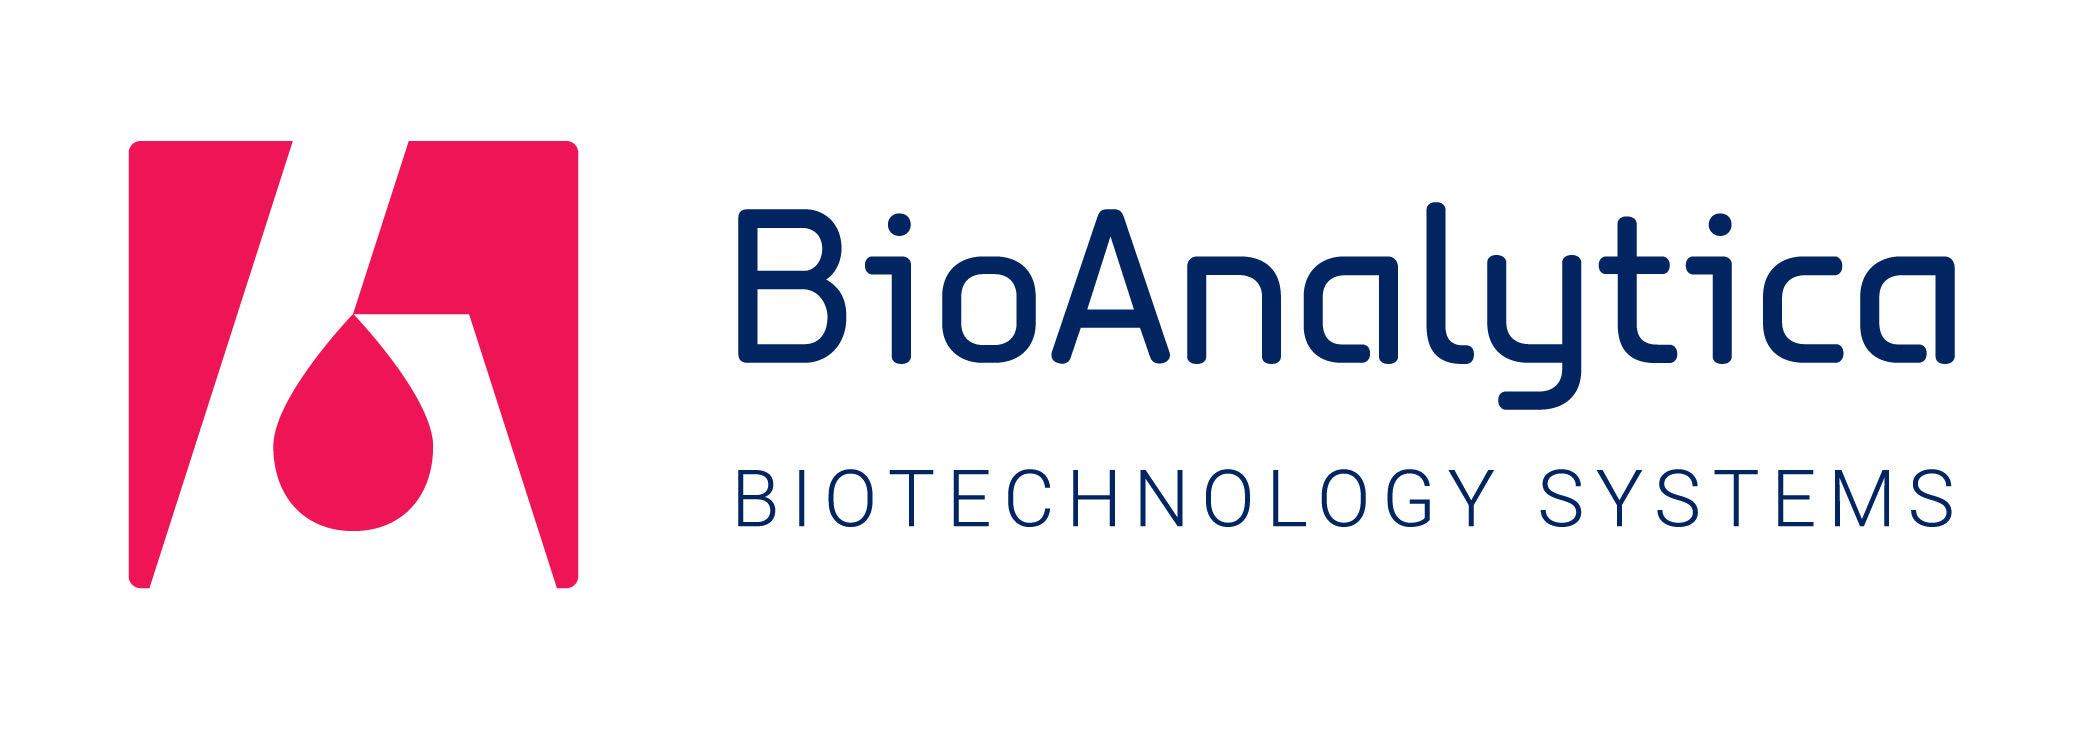 Bioanalytica Logo